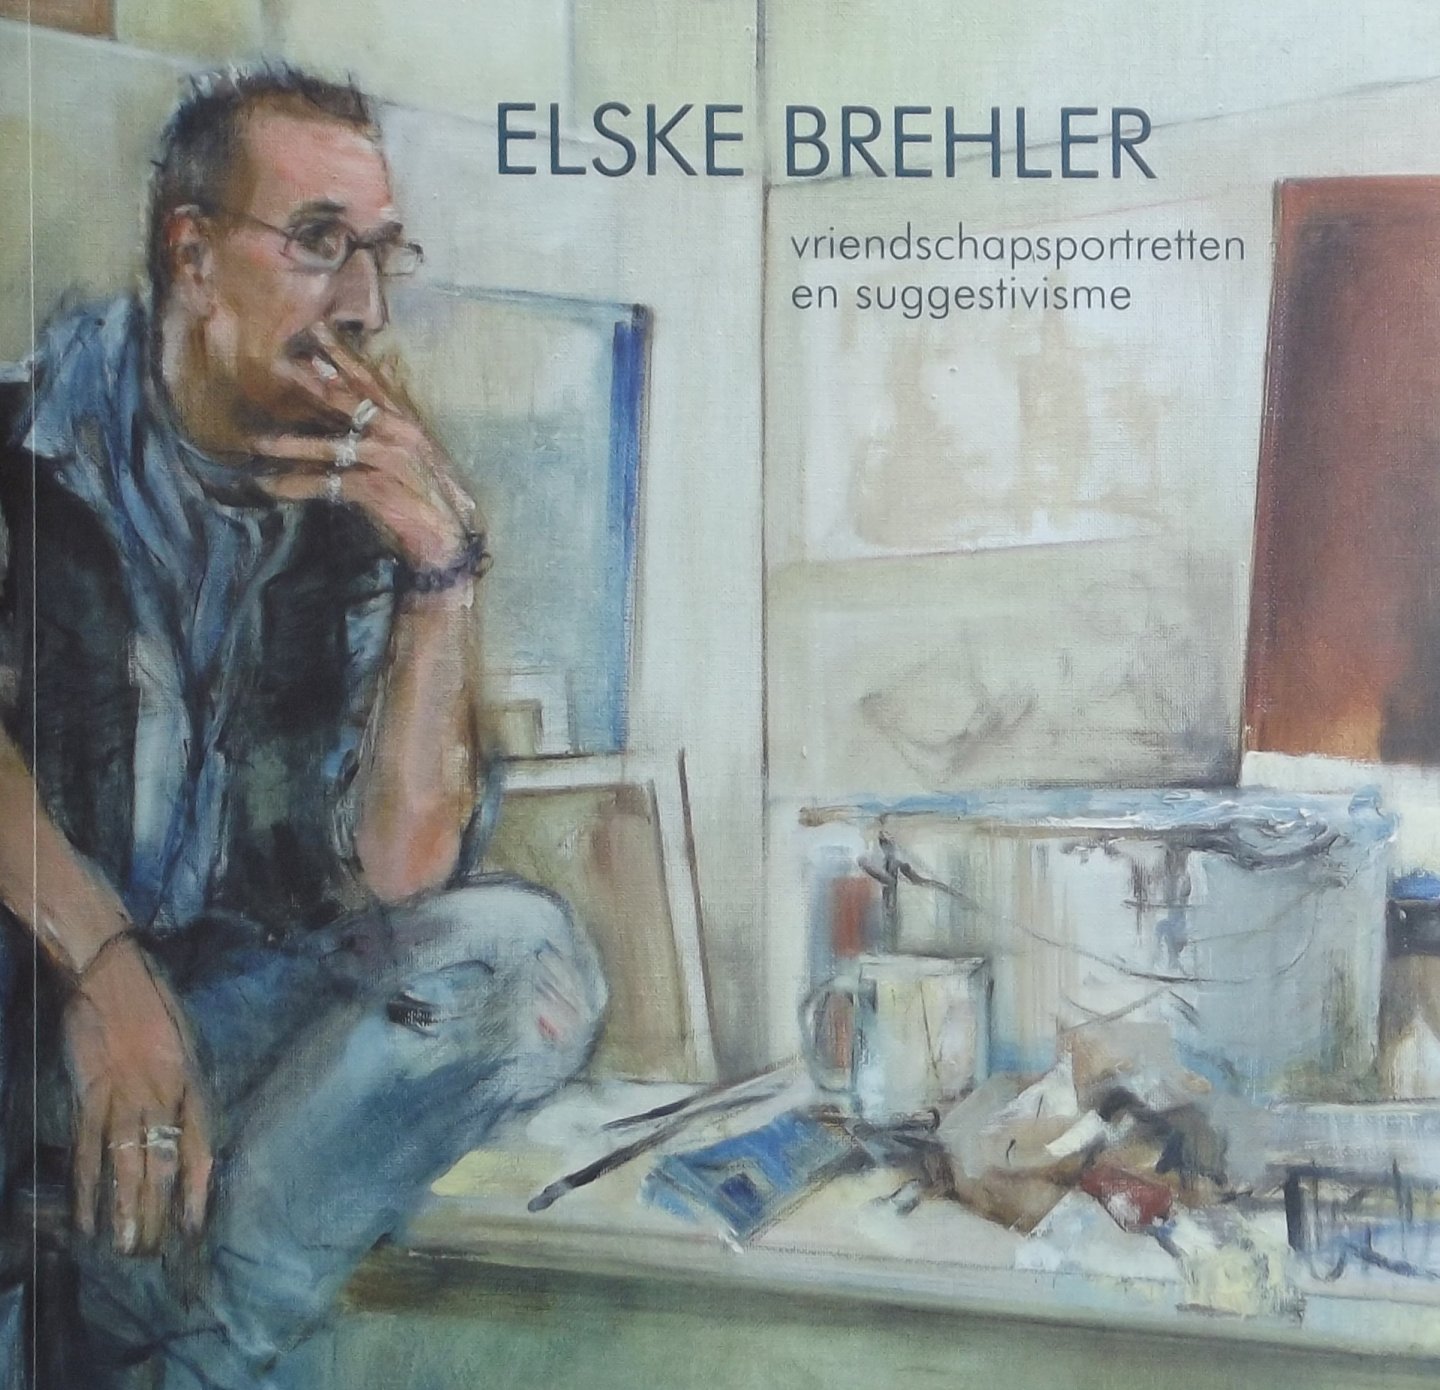 Brehler, Elske. e.a. - Elske Brehler vriendschapsportretten en suggestivisme.